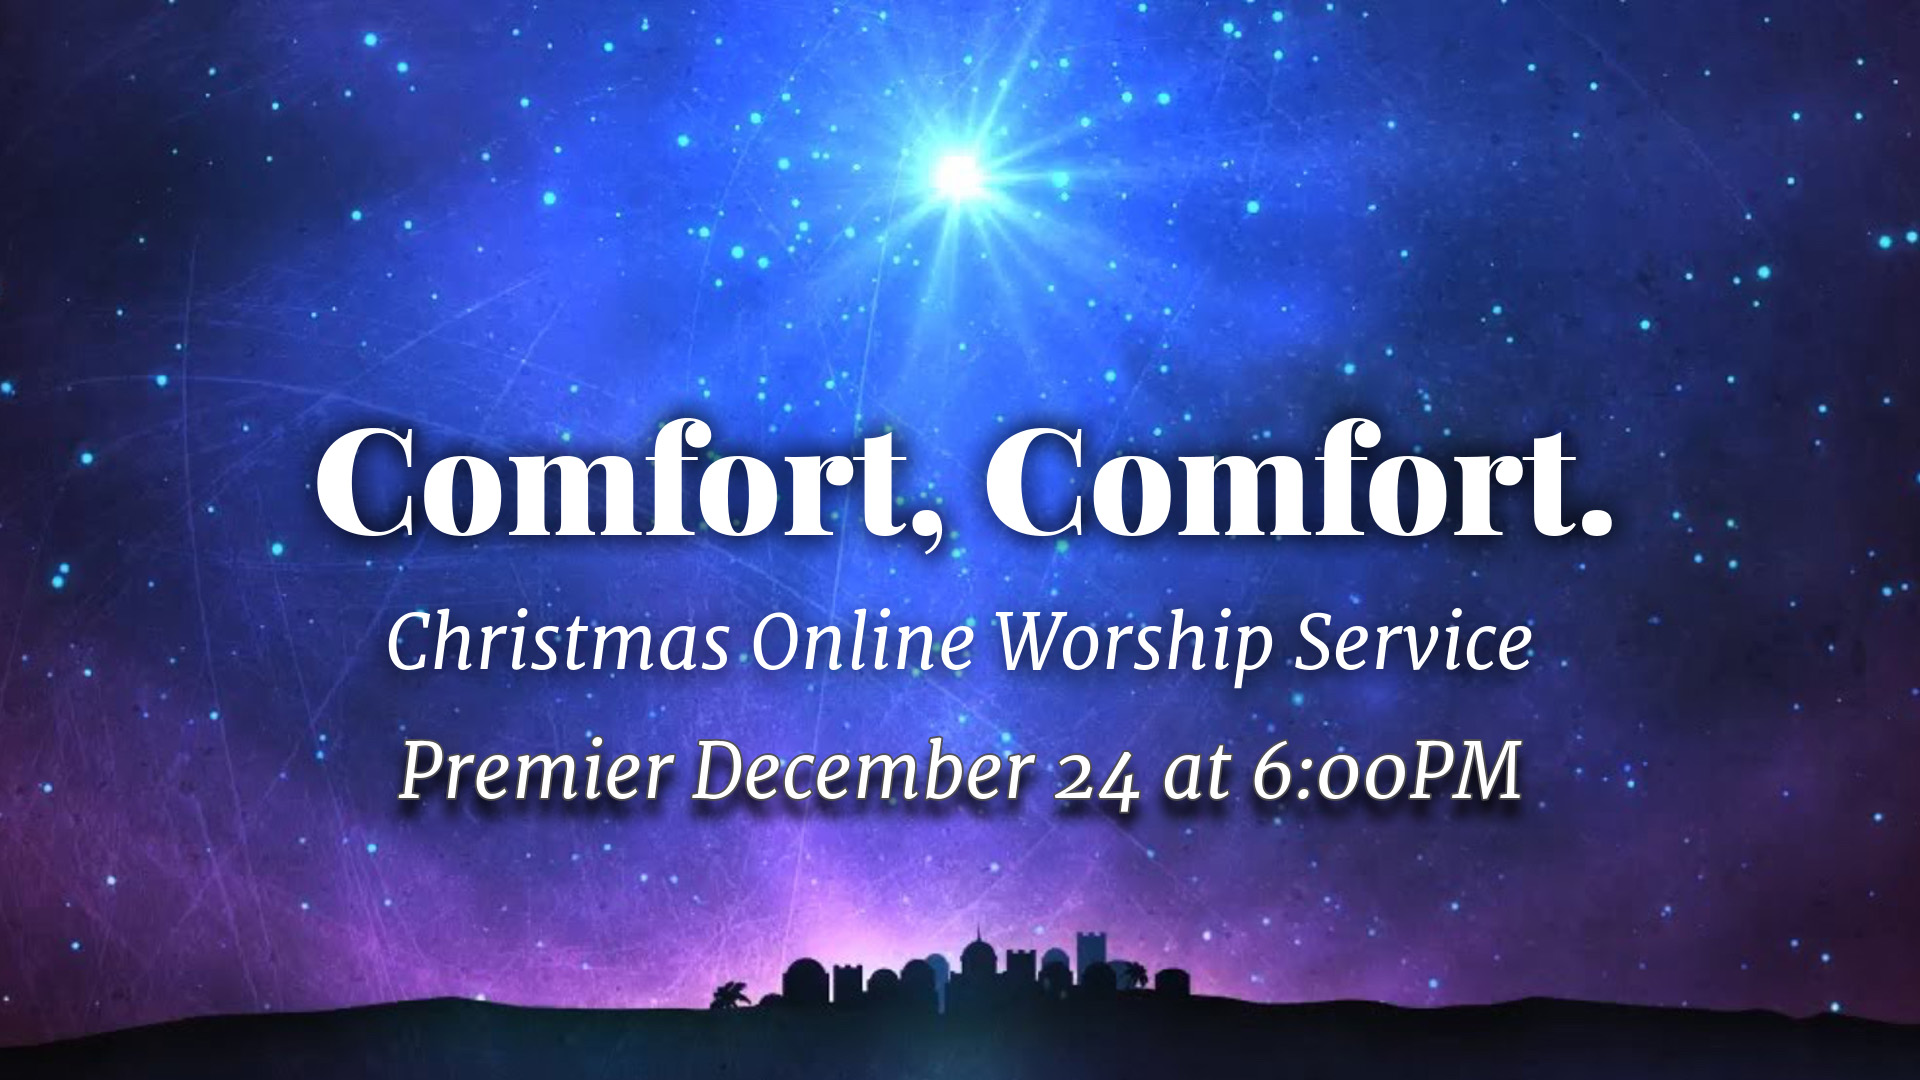 Image for the sermon Comfort, Comfort.